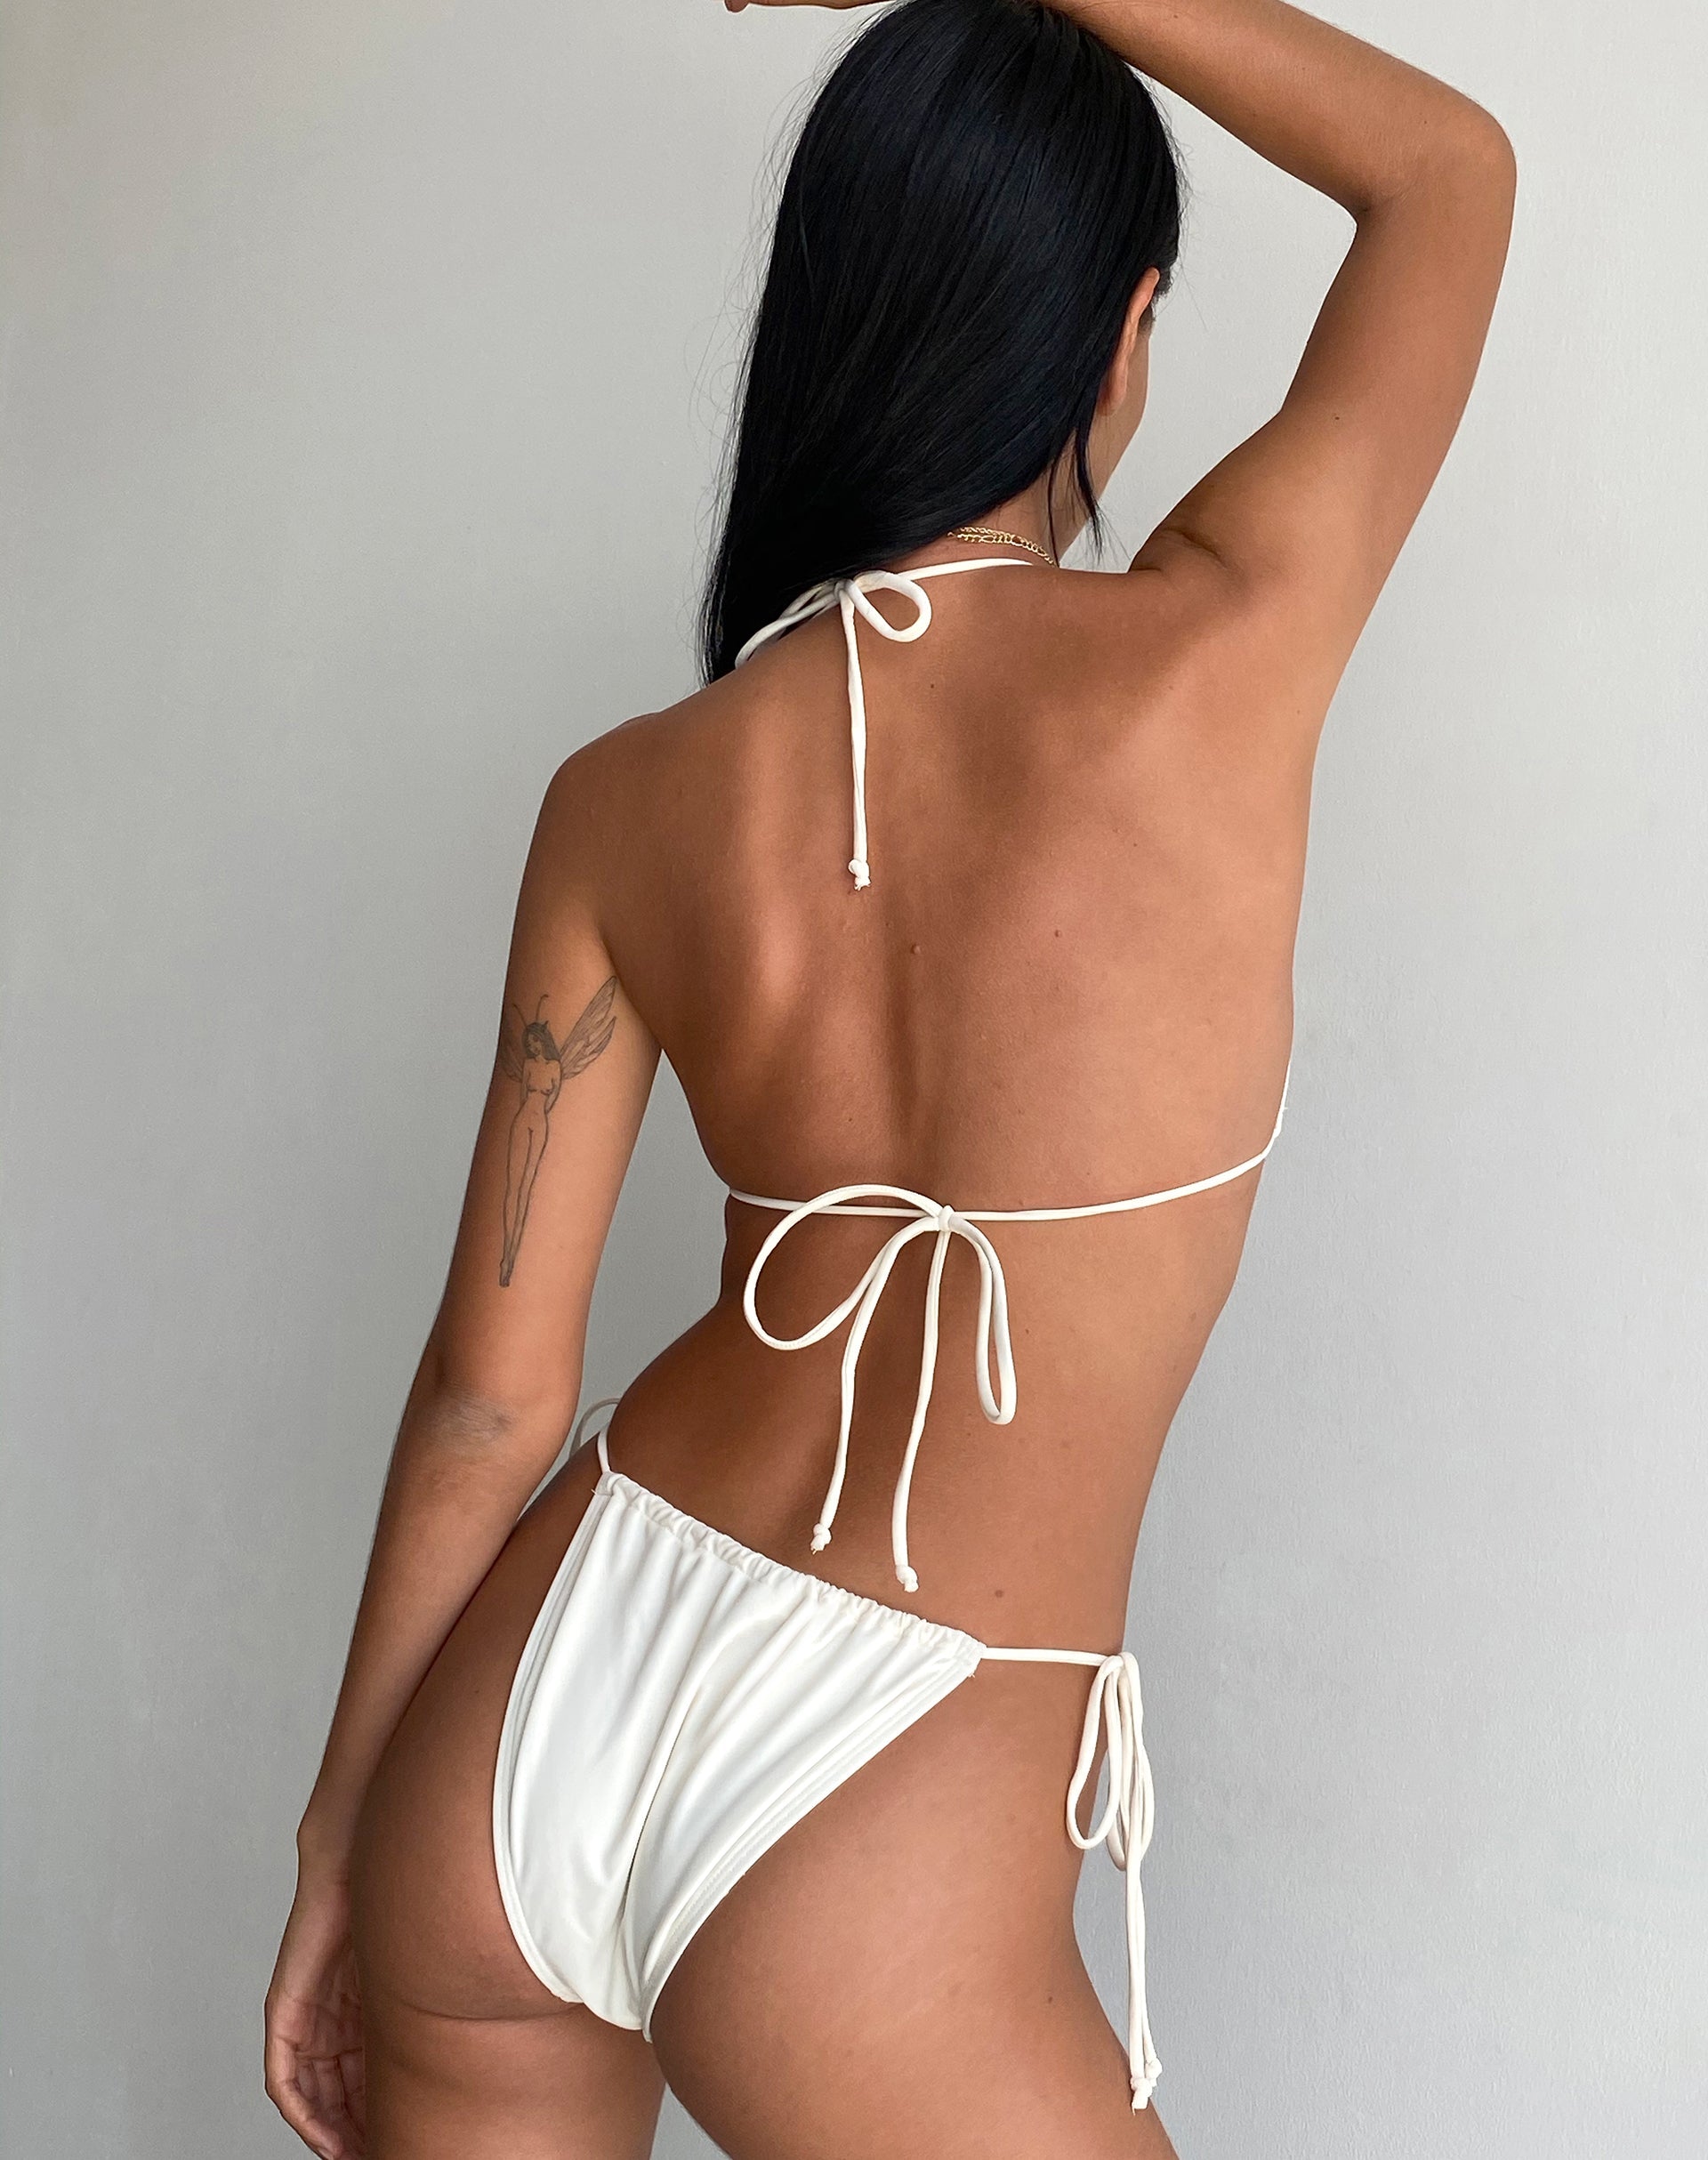 Image of Leyna Bikini Bottom in Ivory with Black Bow